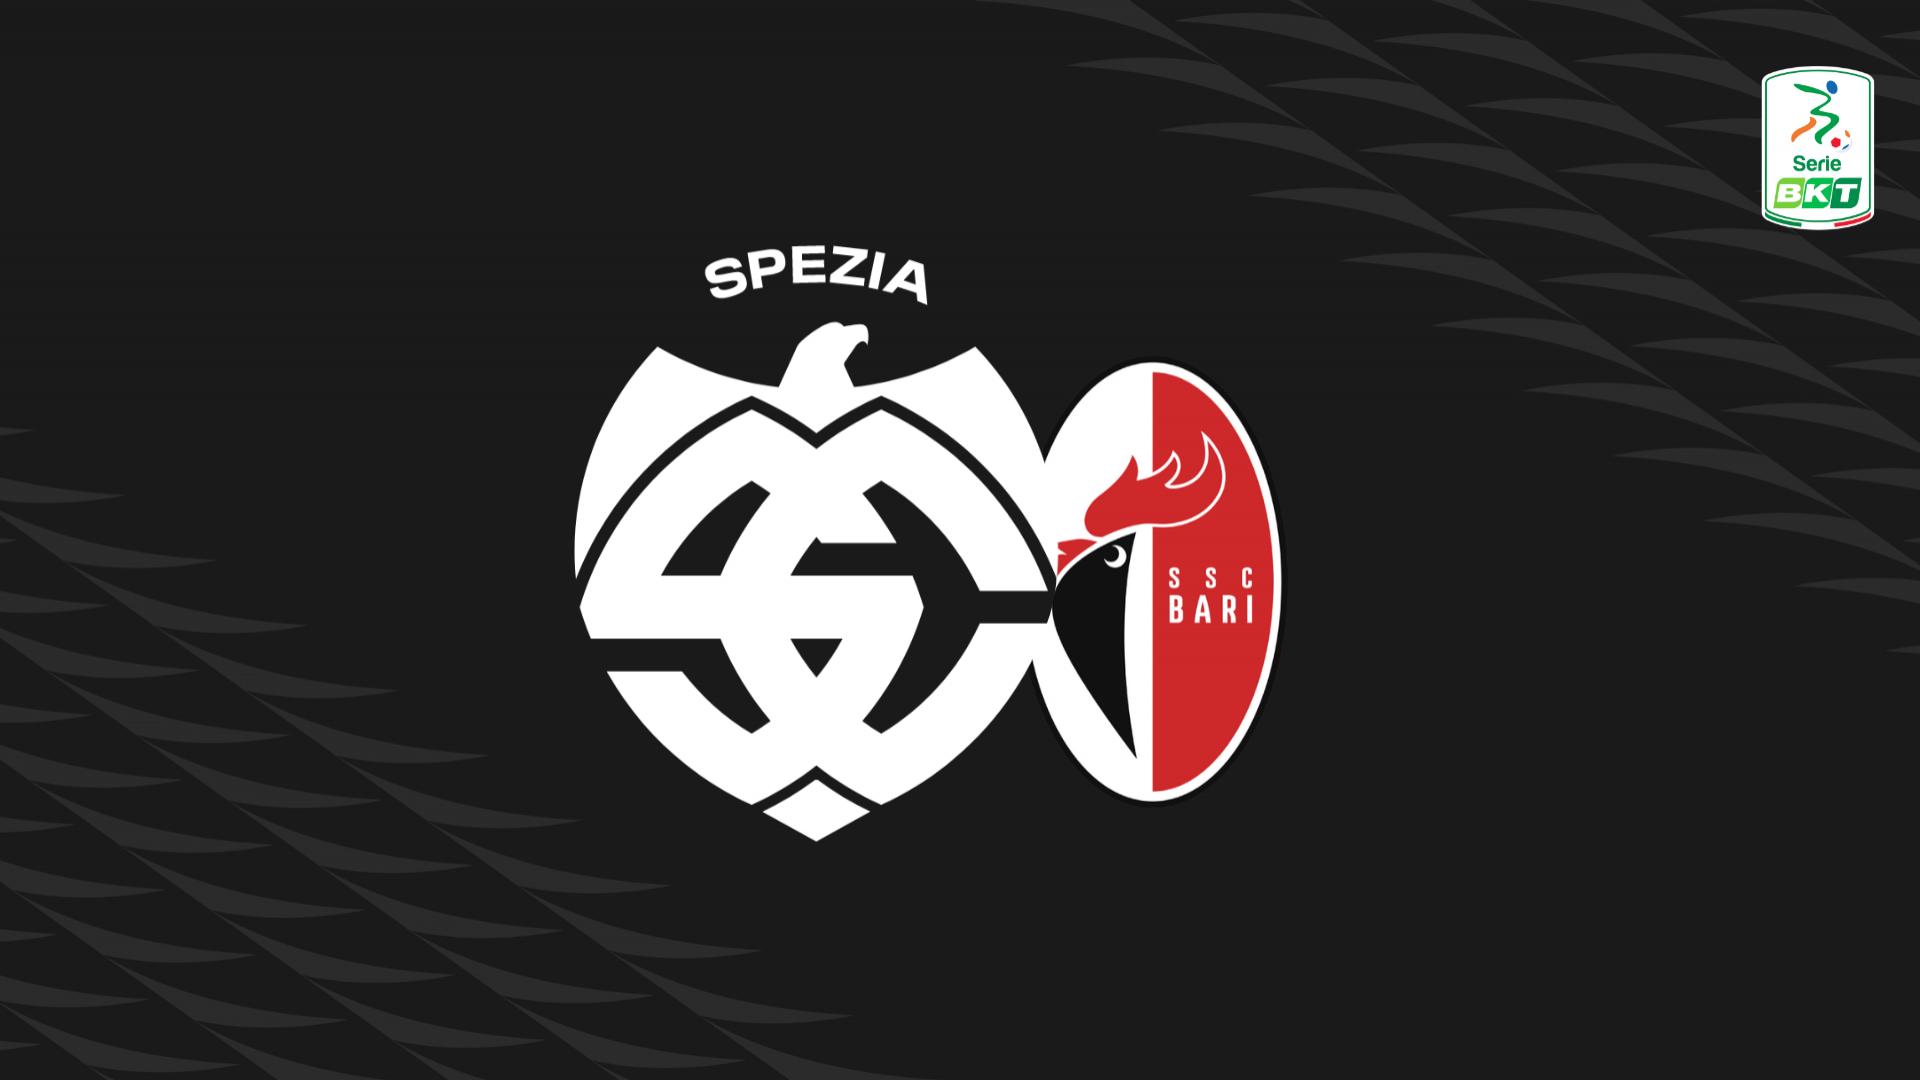 Serie BKT: Spezia-Bari 1-0